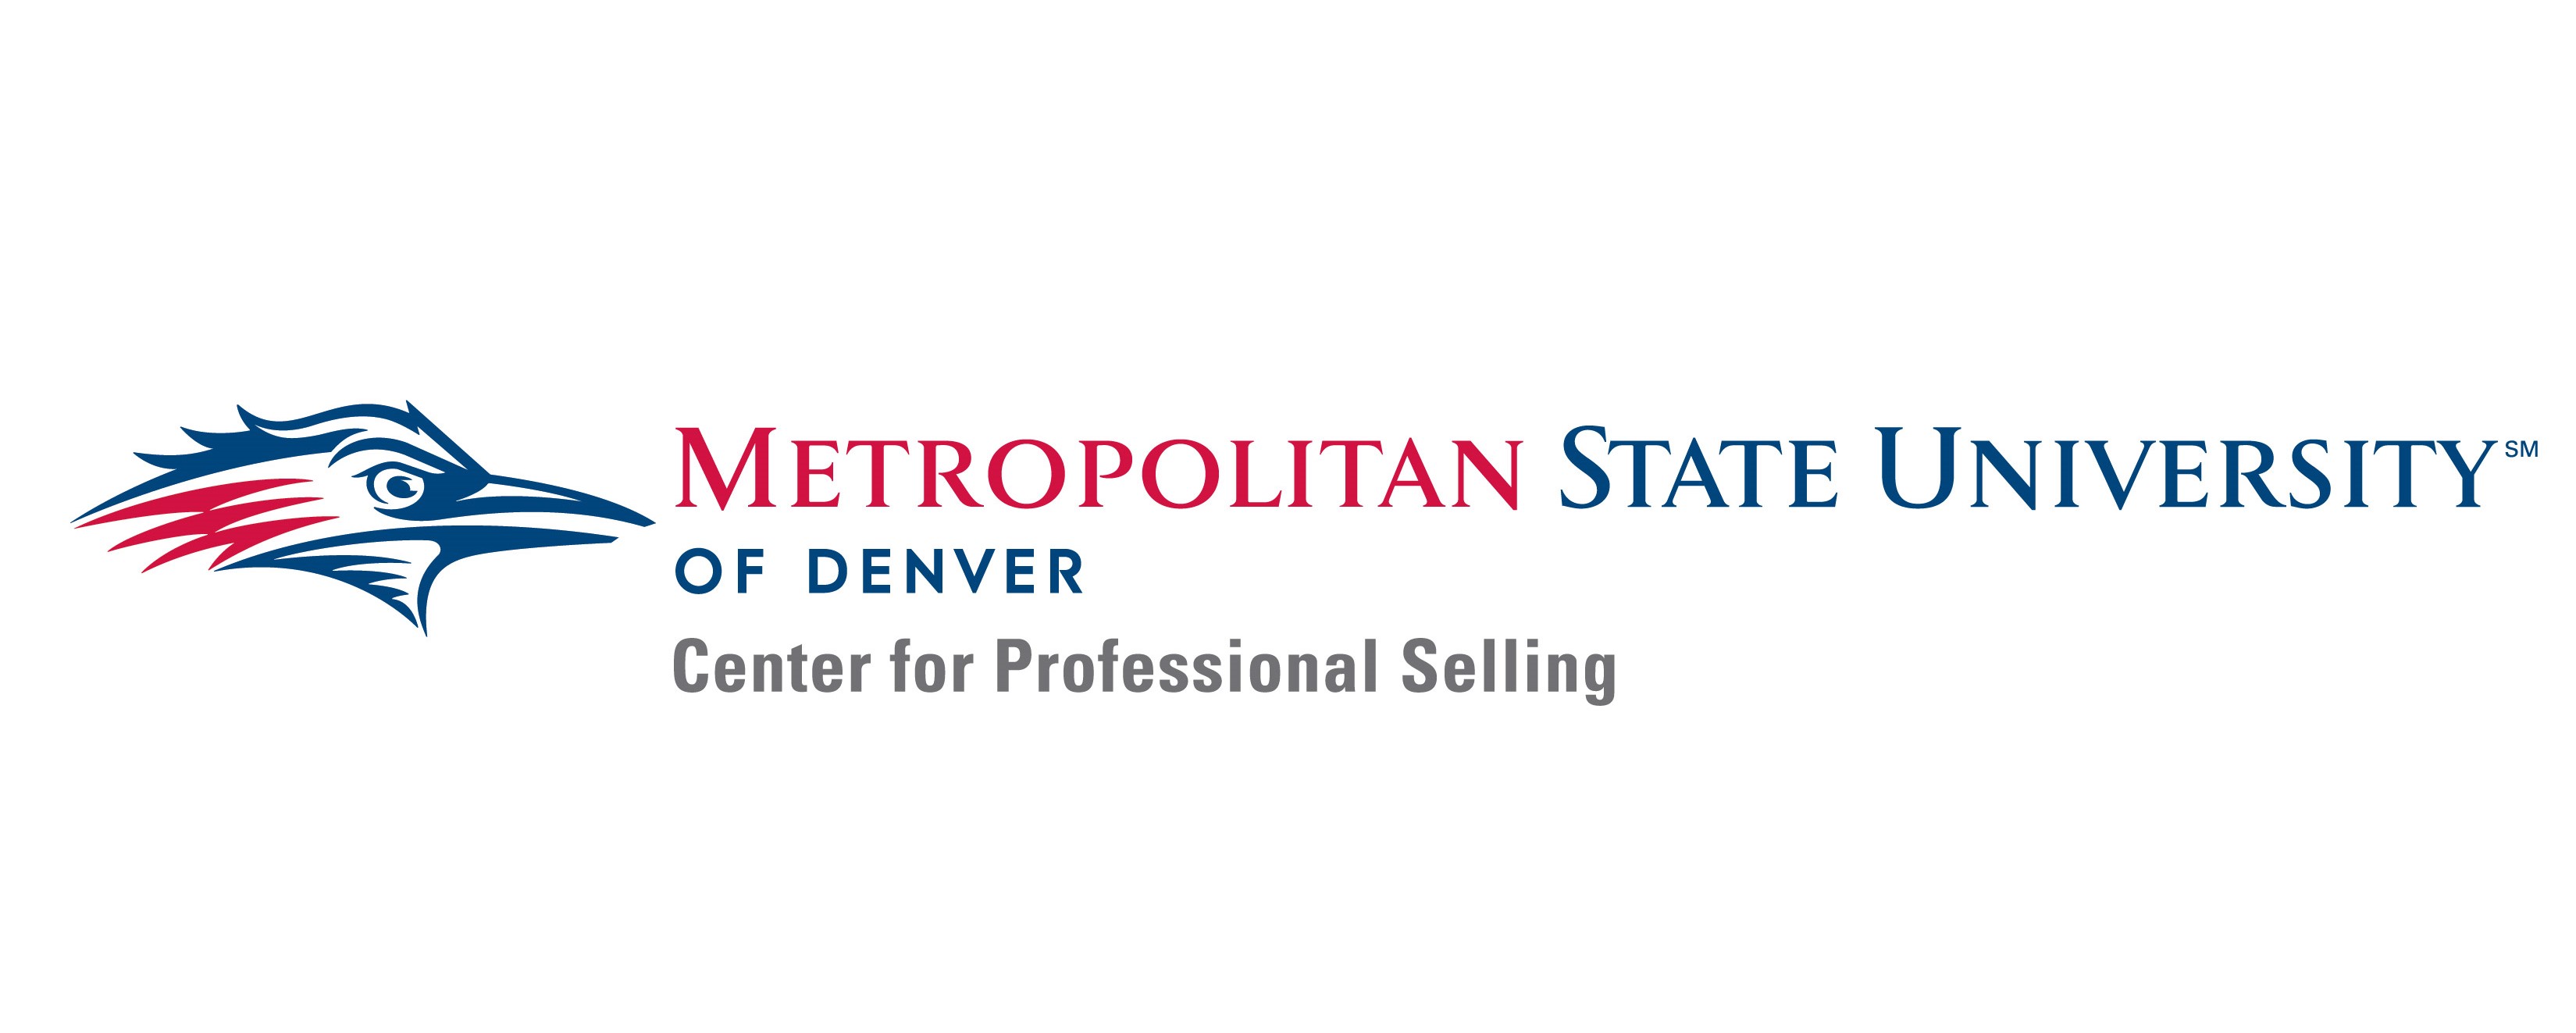 MSU Denver center for professional selling logo